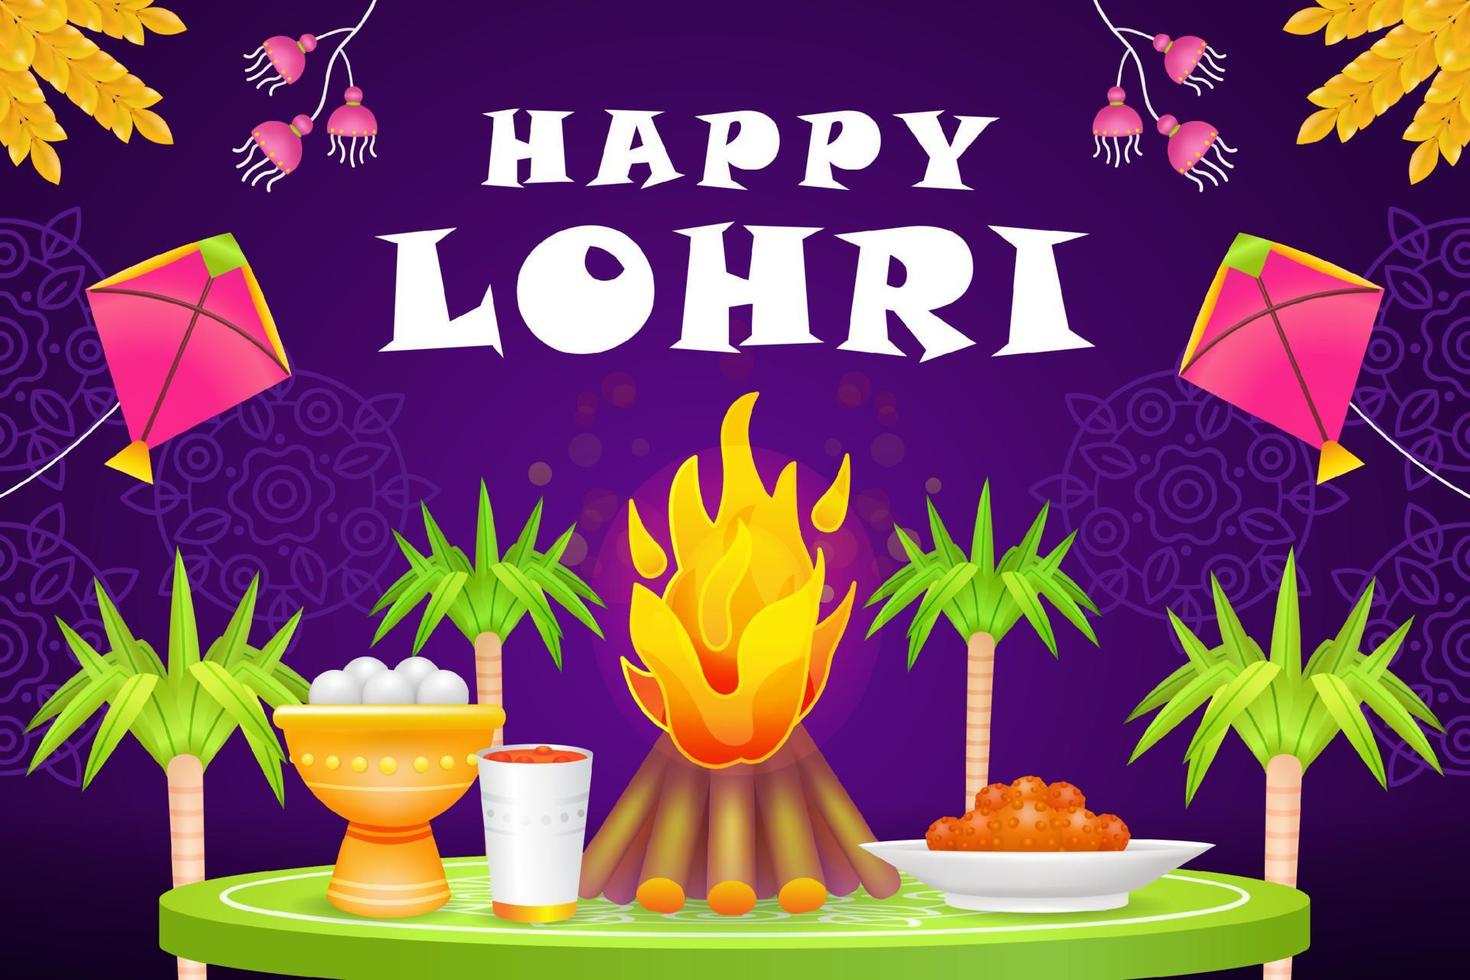 Happy Lohri. 3d illustration of bonfire, sugarcane, kite, food and drink vector